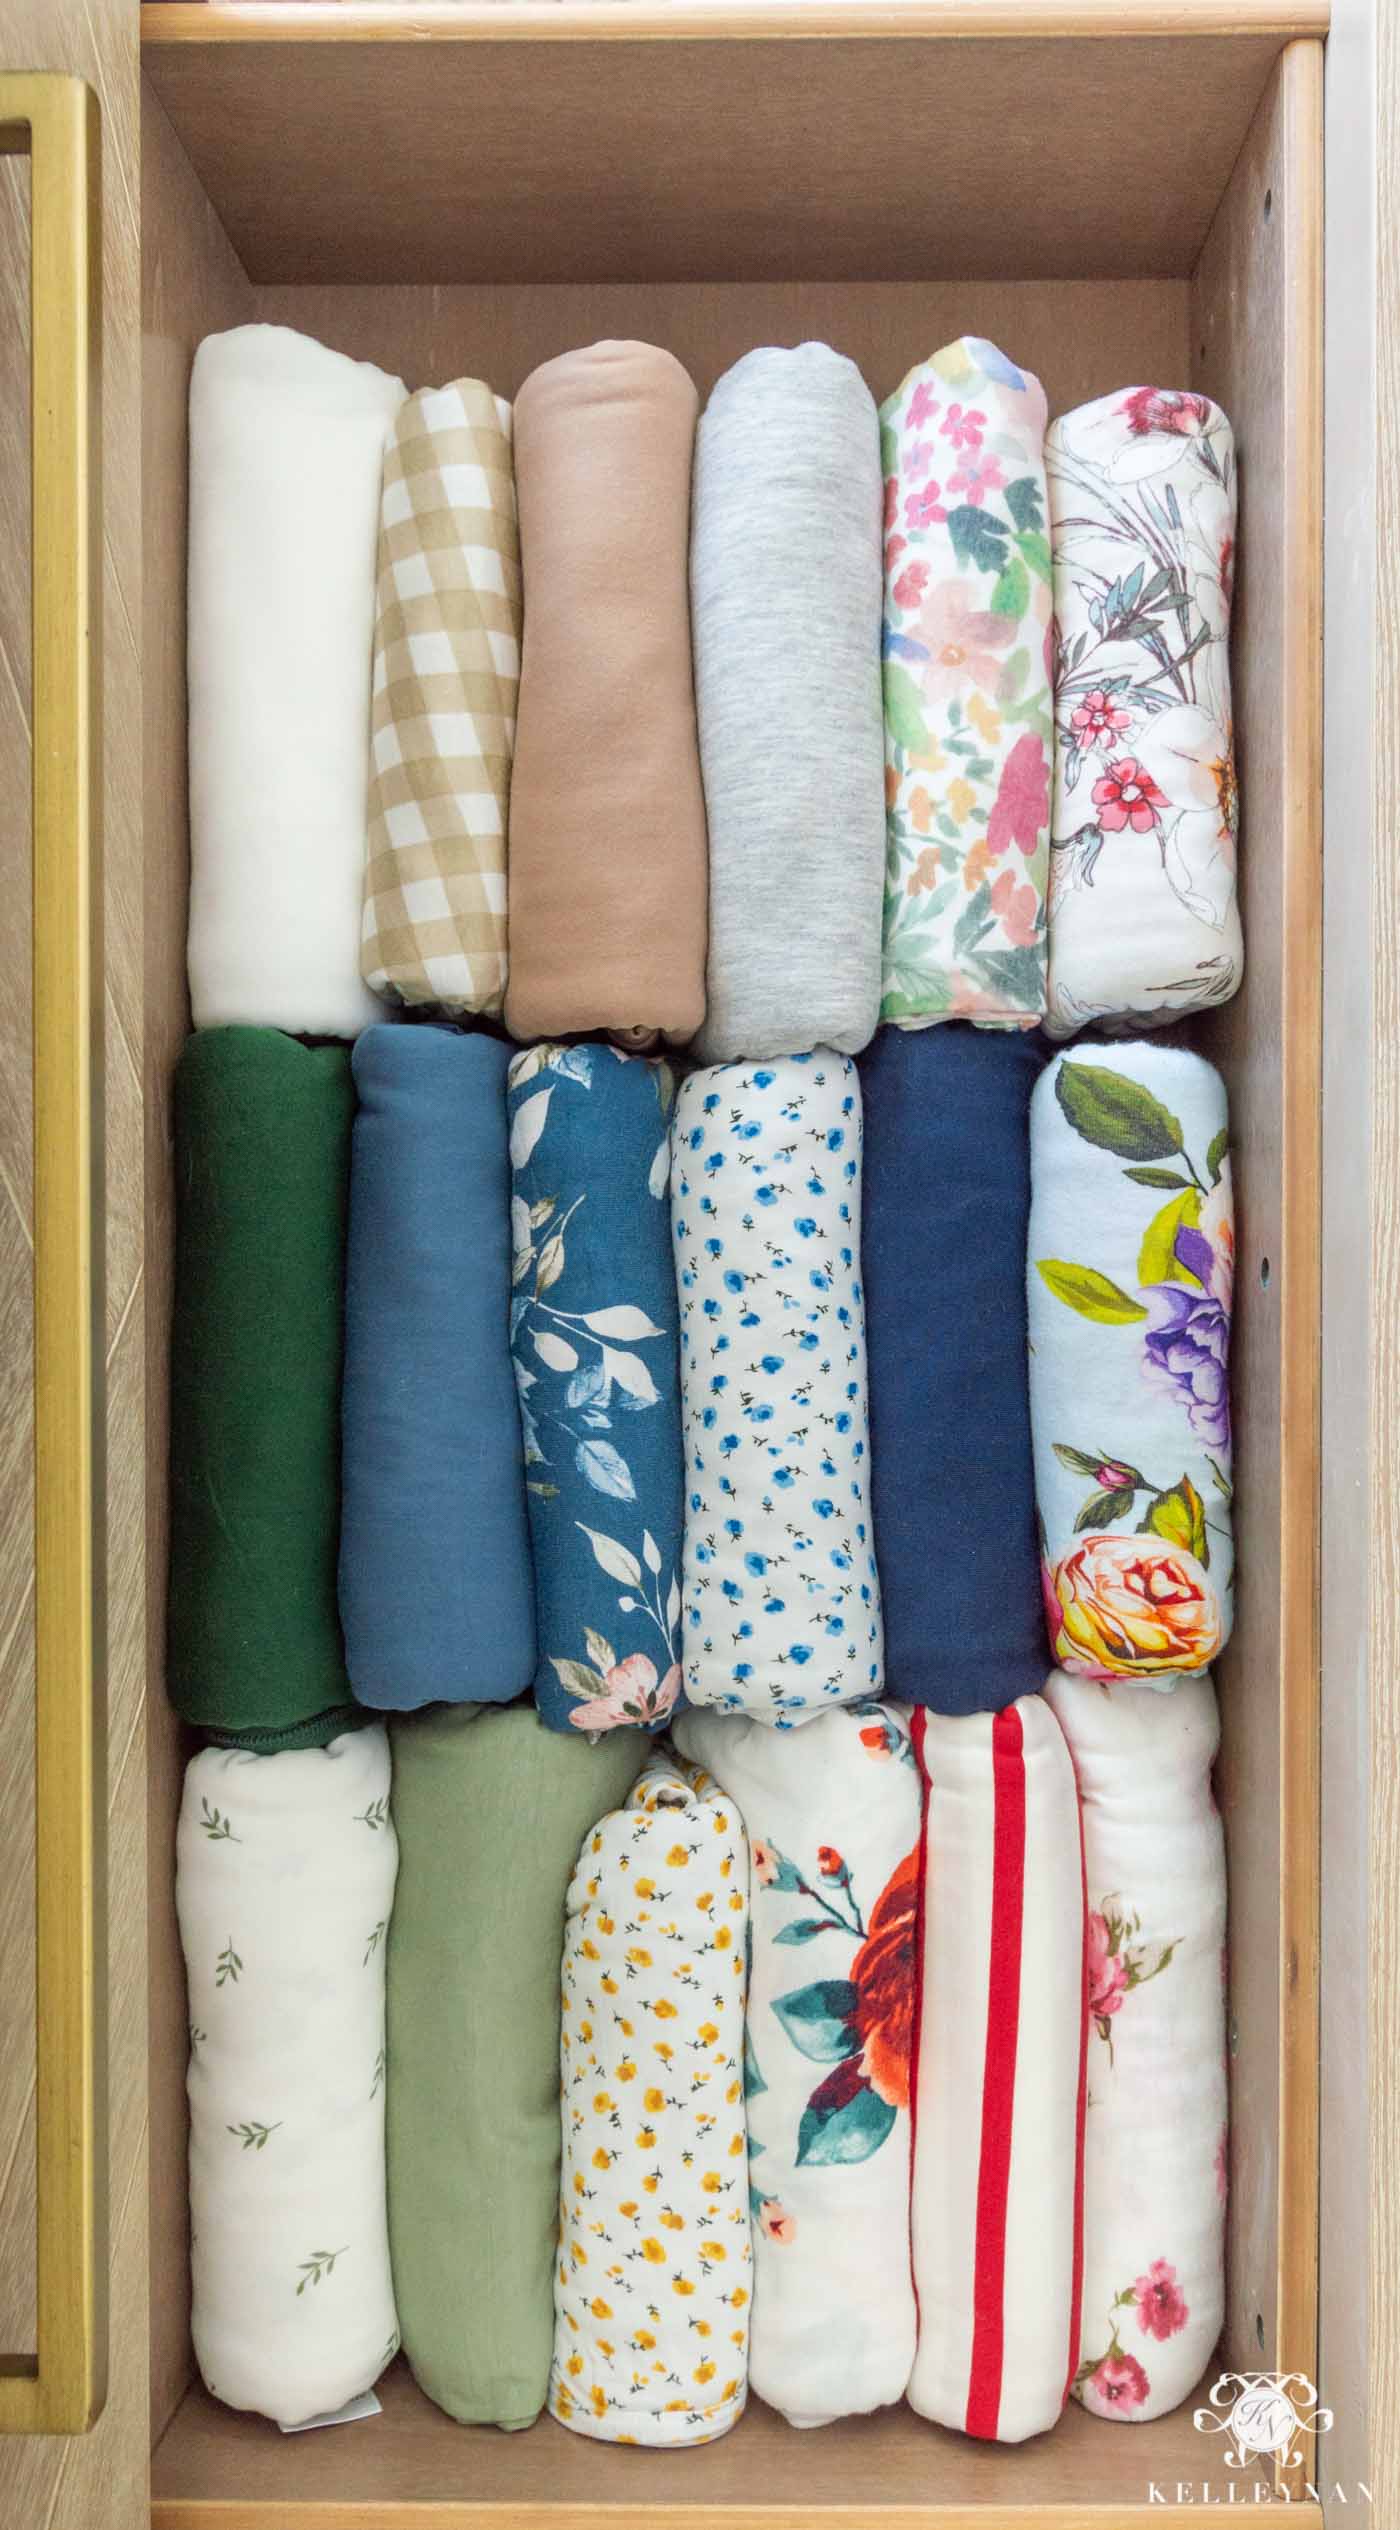 How to Organize Your Nursery Dresser